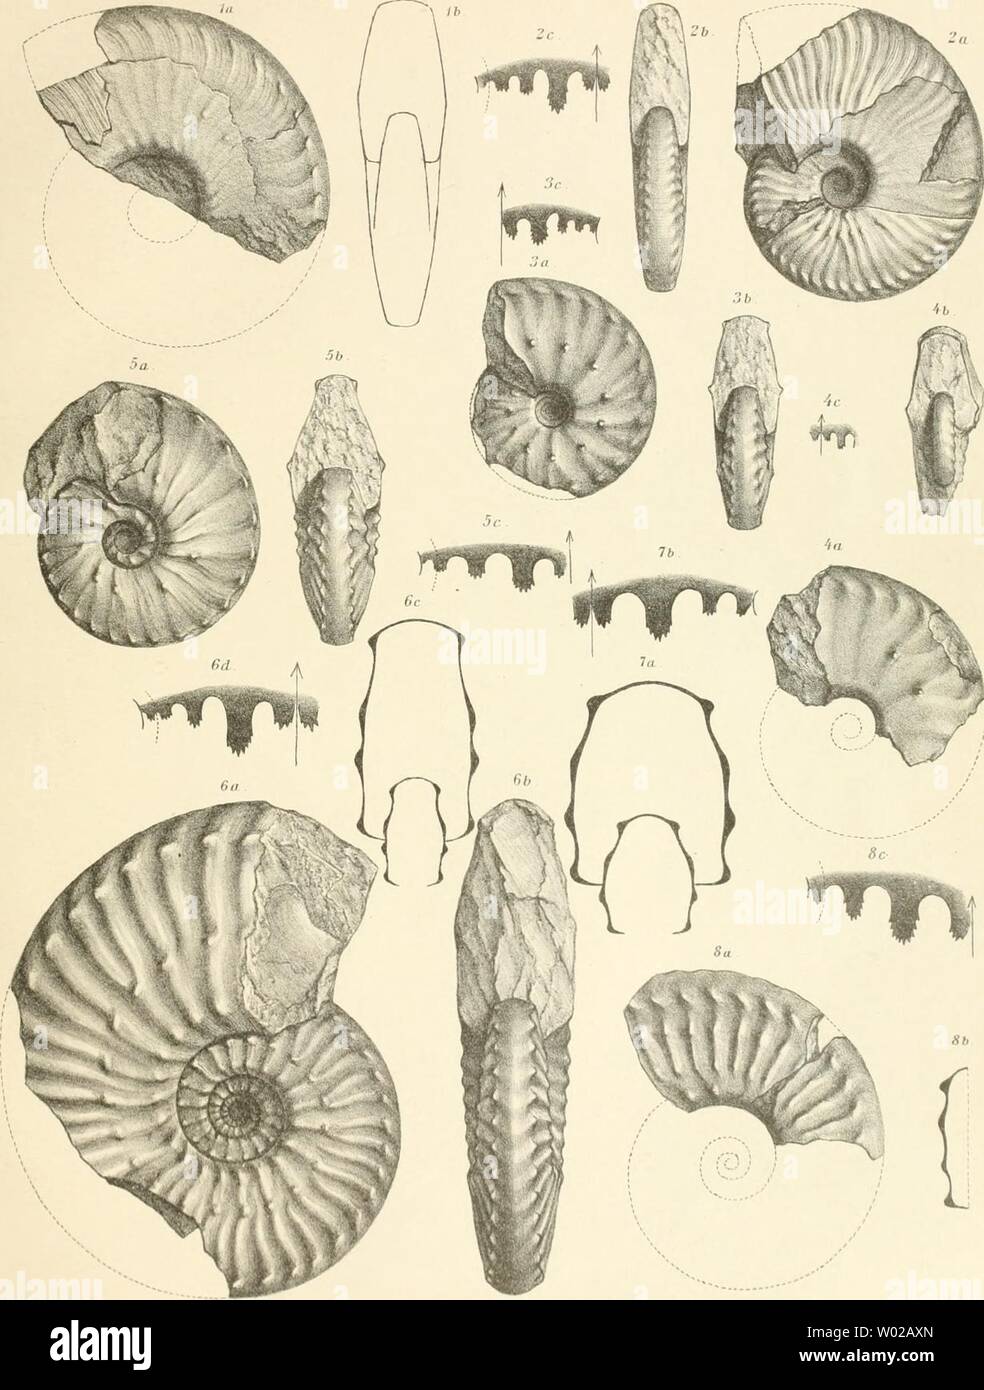 Archive image from page 132 of Die Cephalopodenfauna der Reiflinger Kalke. Die Cephalopodenfauna der Reiflinger Kalke  diecephalopodenf00arth Year: 1896  (i.v.ArlhalMM': (;(!|iluilii|)(i(li',iil';iiiii;i der FeiCIiinjor K.'ilke .(Taf.lV) Taf.IV    yi-SwaboJand/faj.gez.u.a/h. FI(!ilj';i()('ziirliI; iilolojirr Ocslnn-ii h-l'ii!|;inis iiiitl dos Orieiils, lin;iii,s(|C!|(!lHMi Villi l'ro(:i)!''.';wM|(;il.ll(l...Iil!)r». Verlag vWlIh Braumüller.k u.k.Hof-u.Universitäts-Buchhändler in Wien . I.ilh.AnstvIh£anmv3rlh.lKan Stock Photo